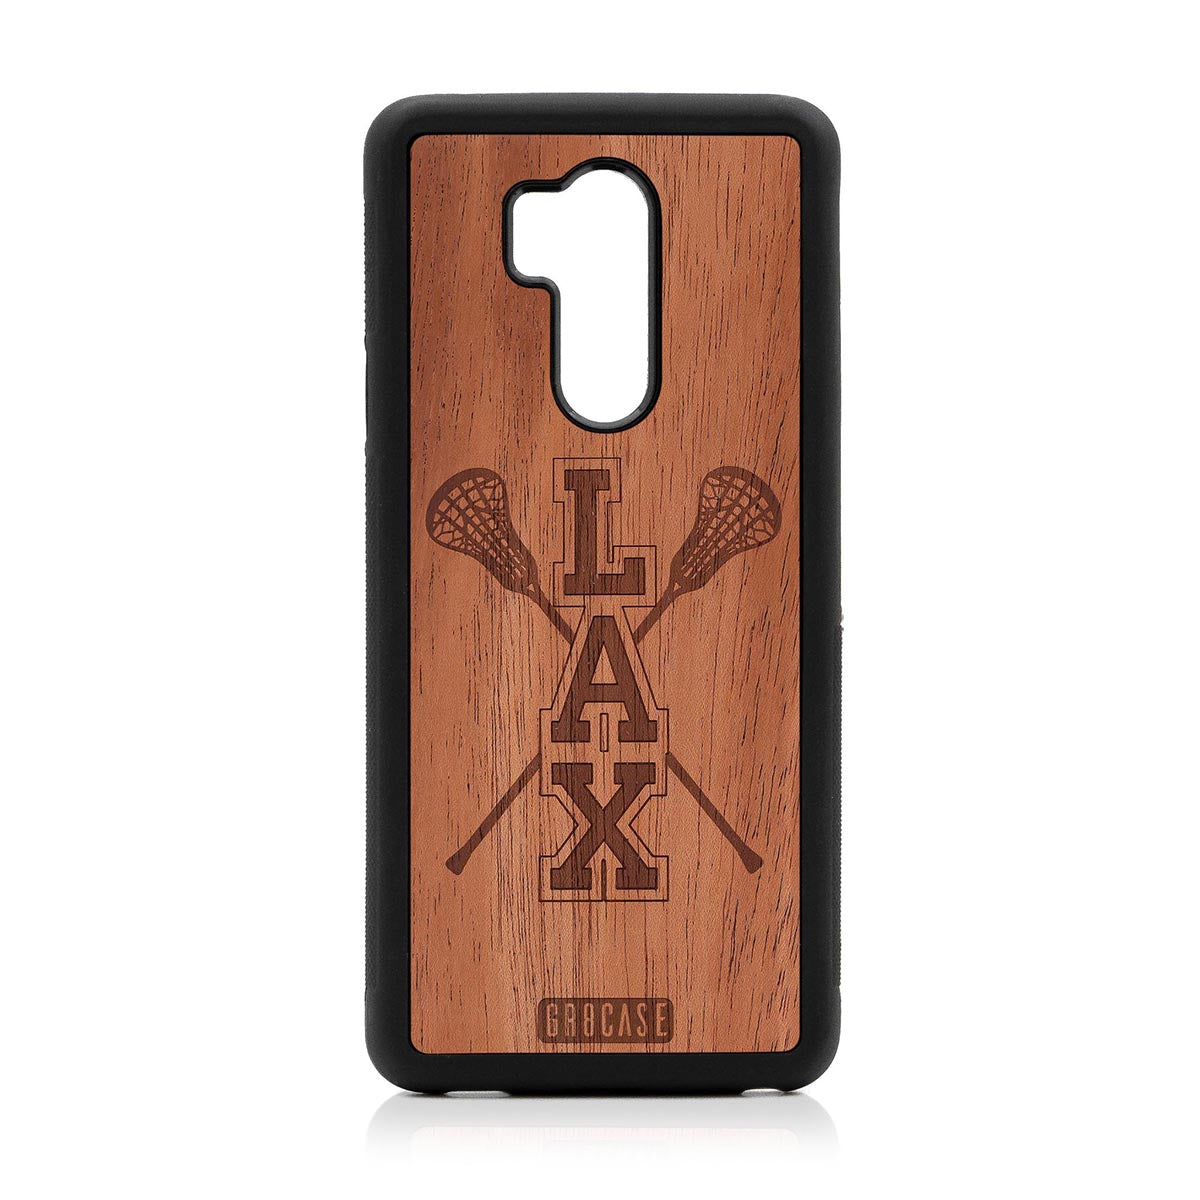 Lacrosse (LAX) Sticks Design Wood Case LG G7 ThinQ by GR8CASE